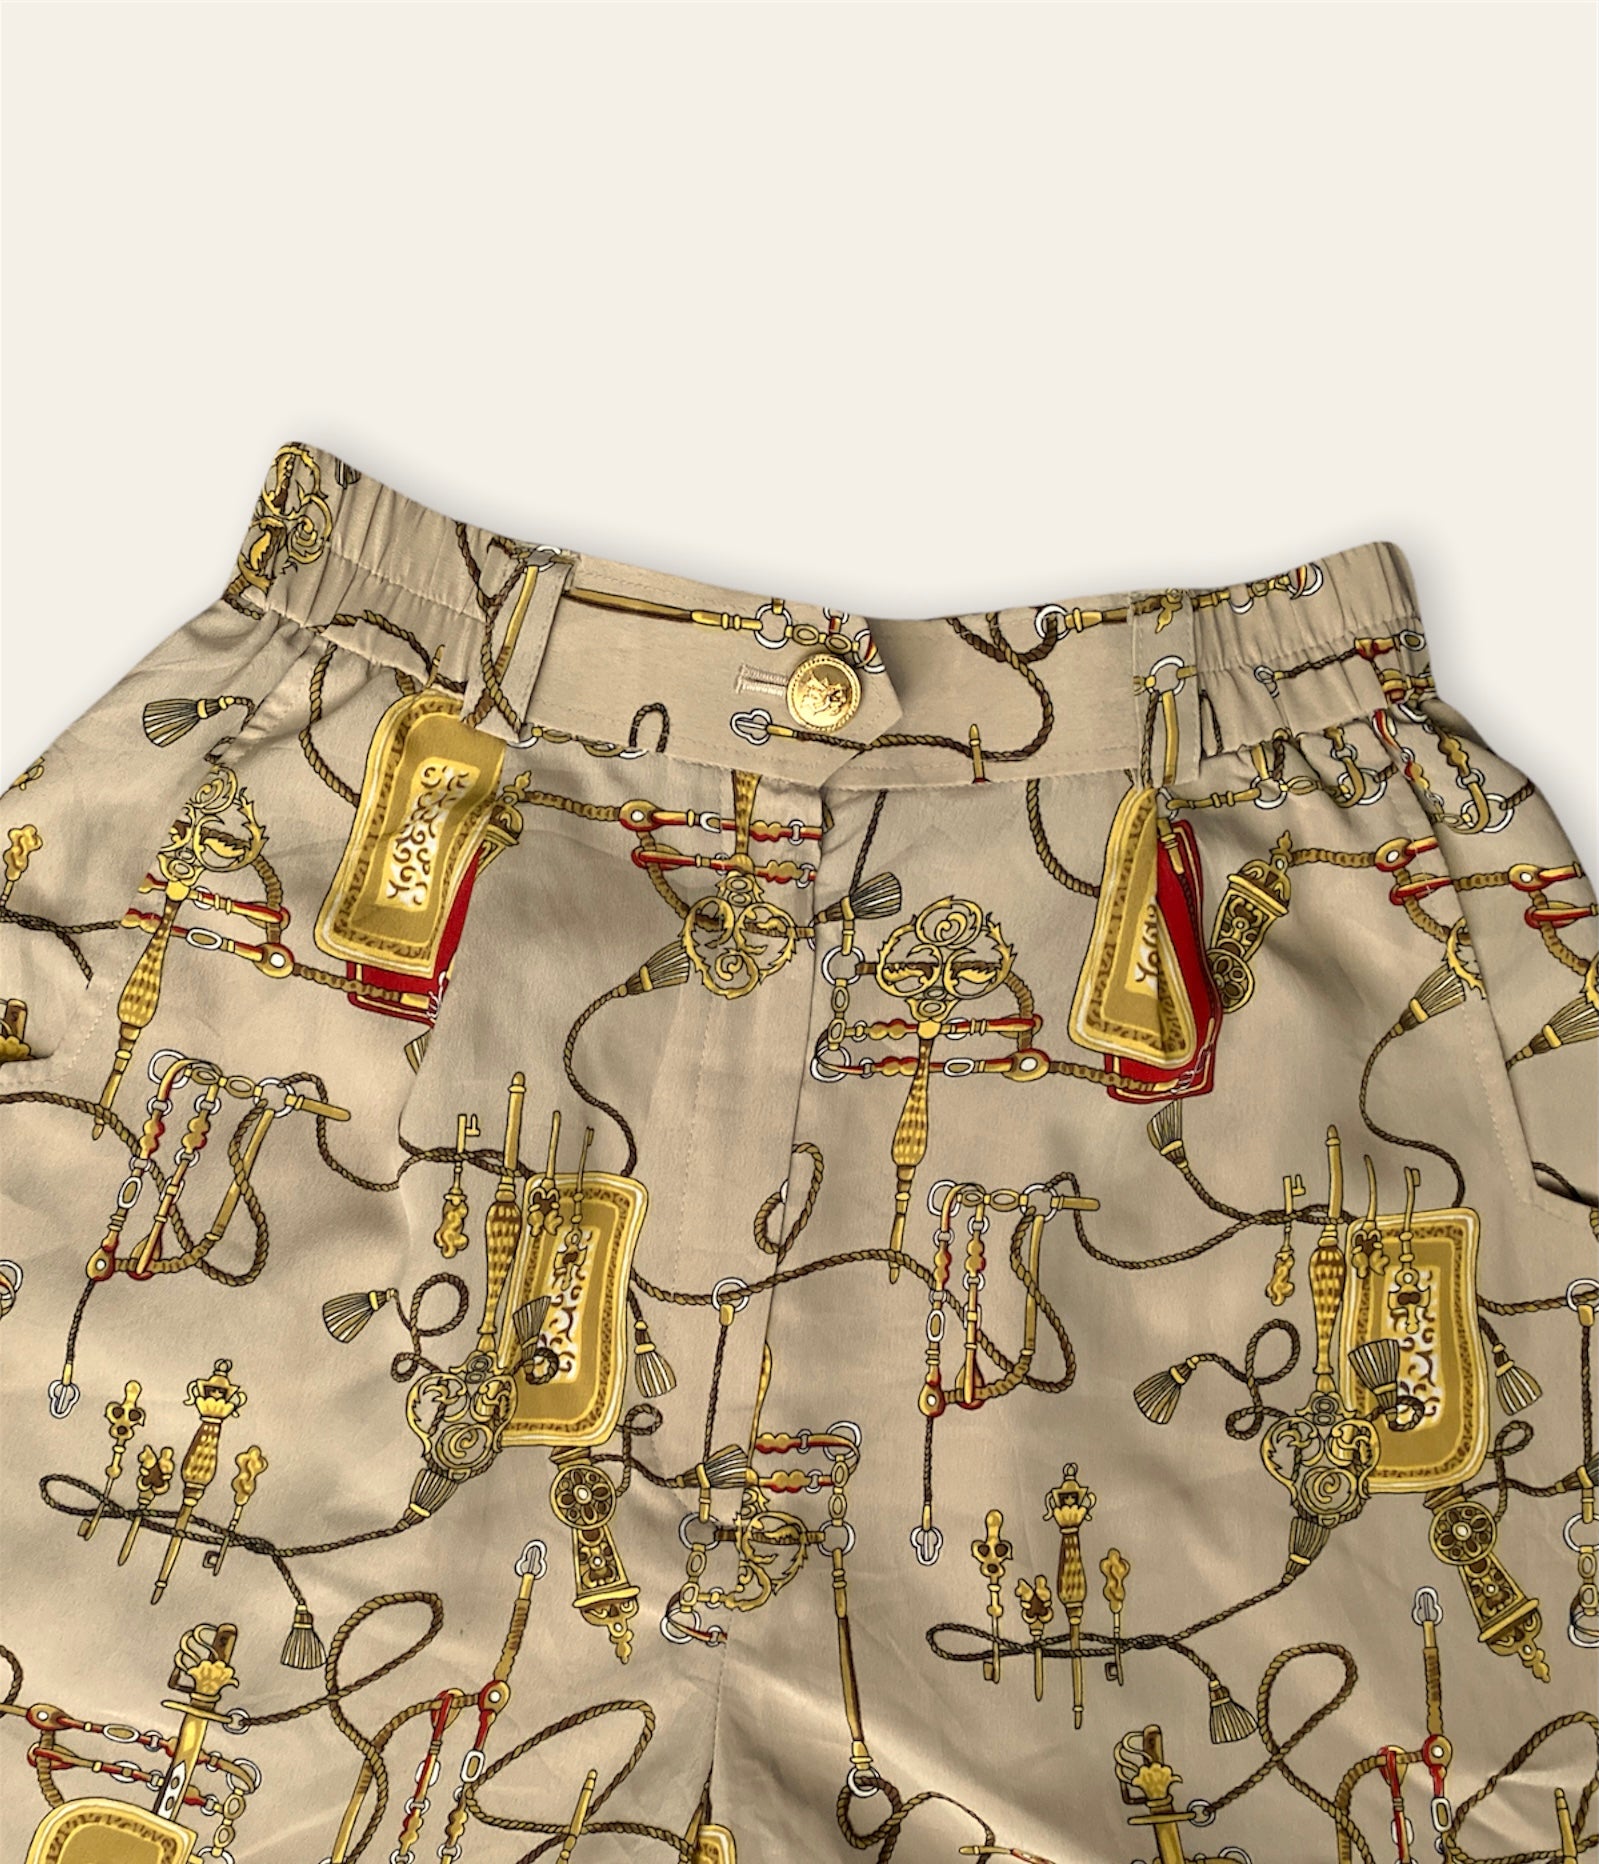 Hermes Style Baroque Print Long Shorts